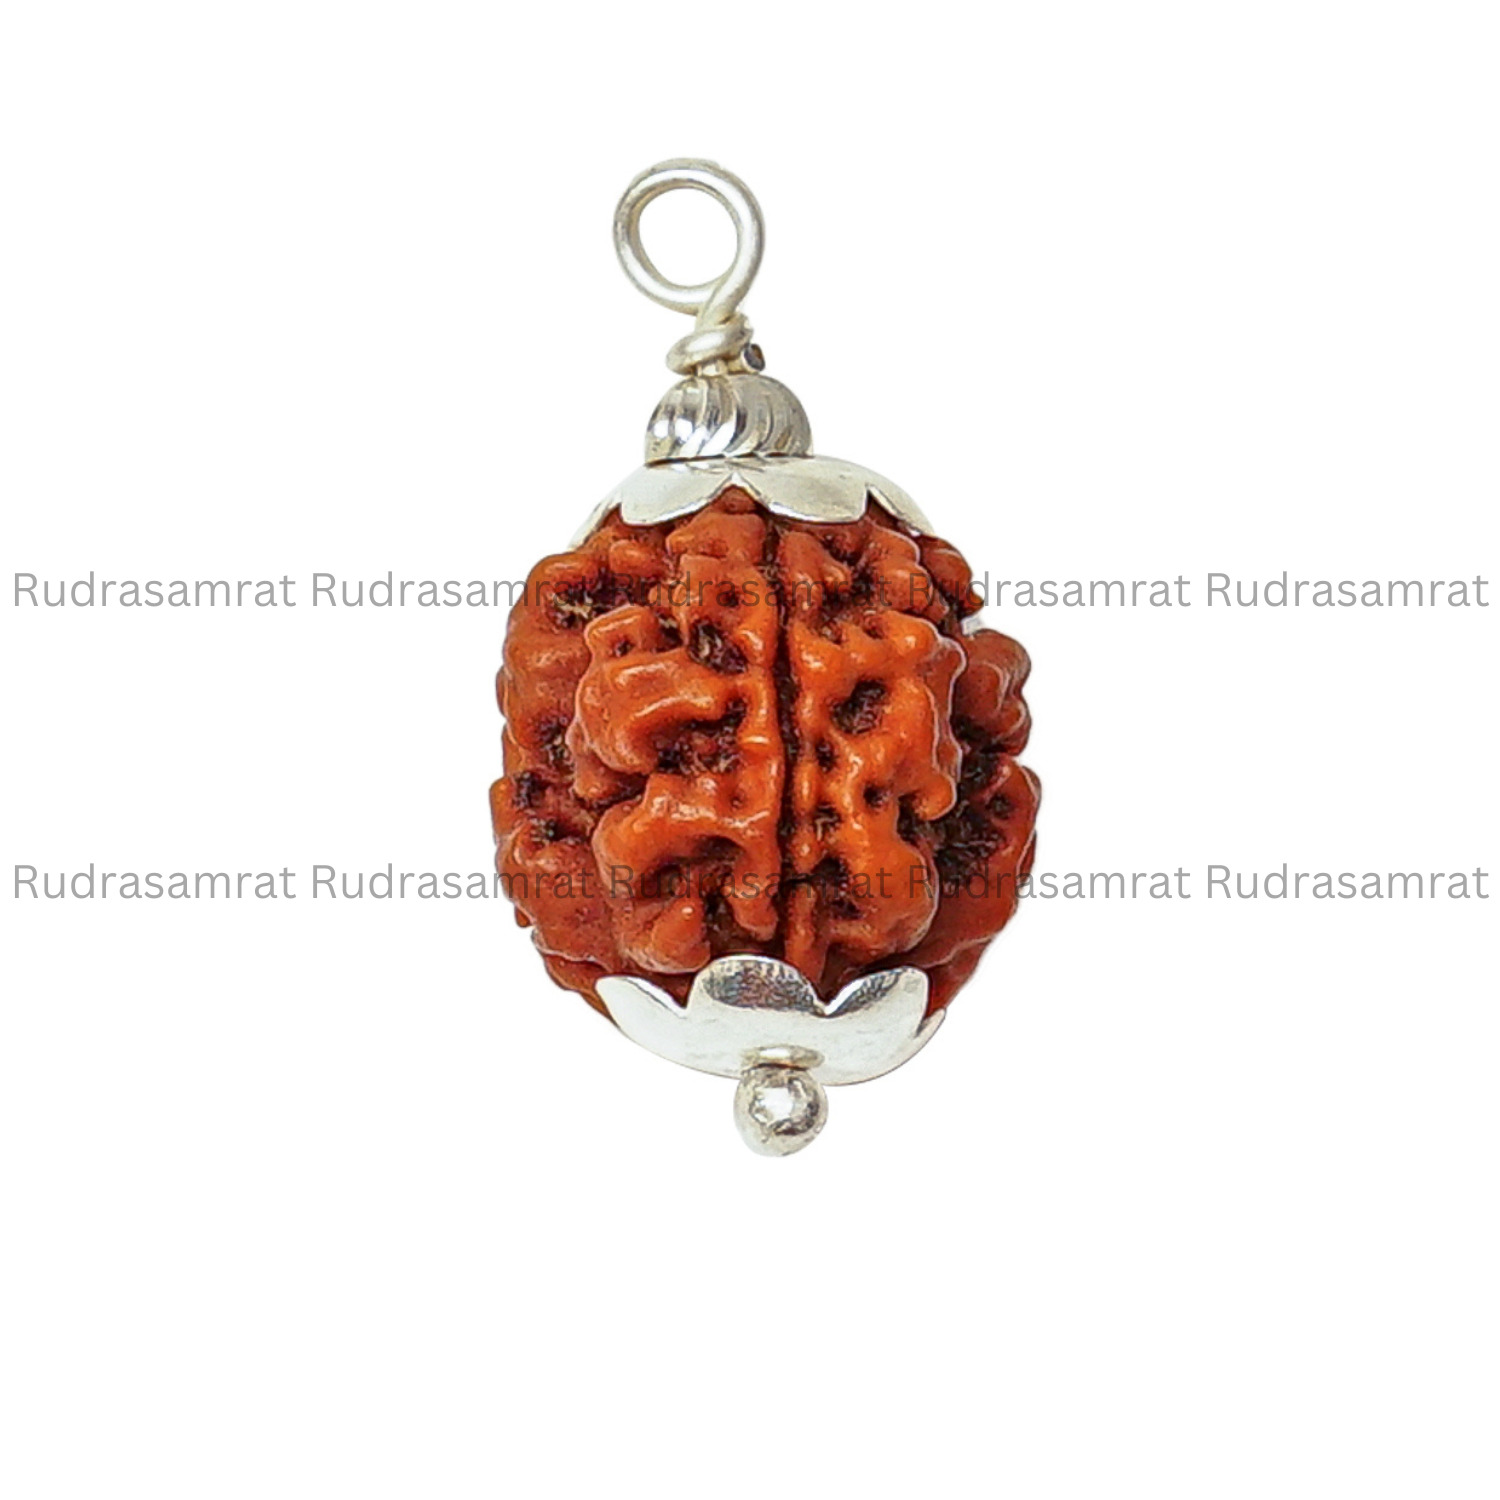 3 Mukhi Rudraksha Bracelet in Bulandshahr at best price by Aggarwal  Rudraksha - Justdial